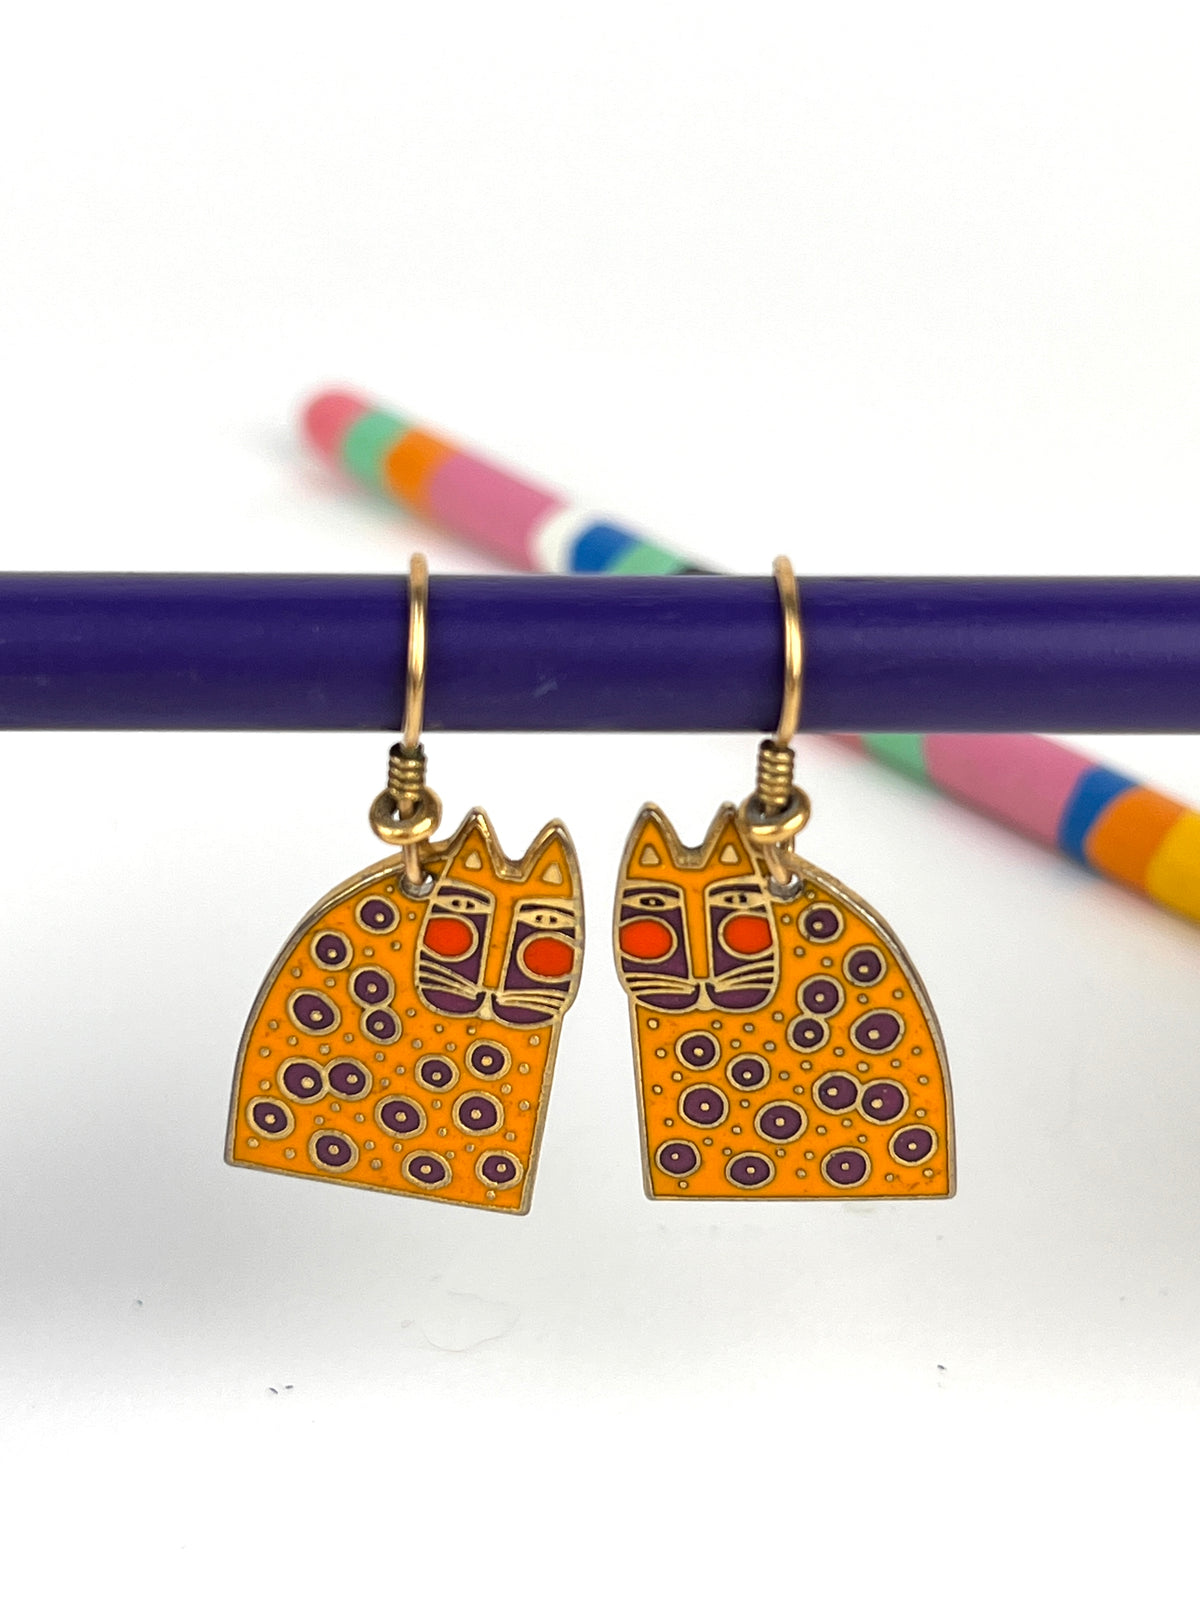 Laurel Burch “Yellow Cat” Earrings